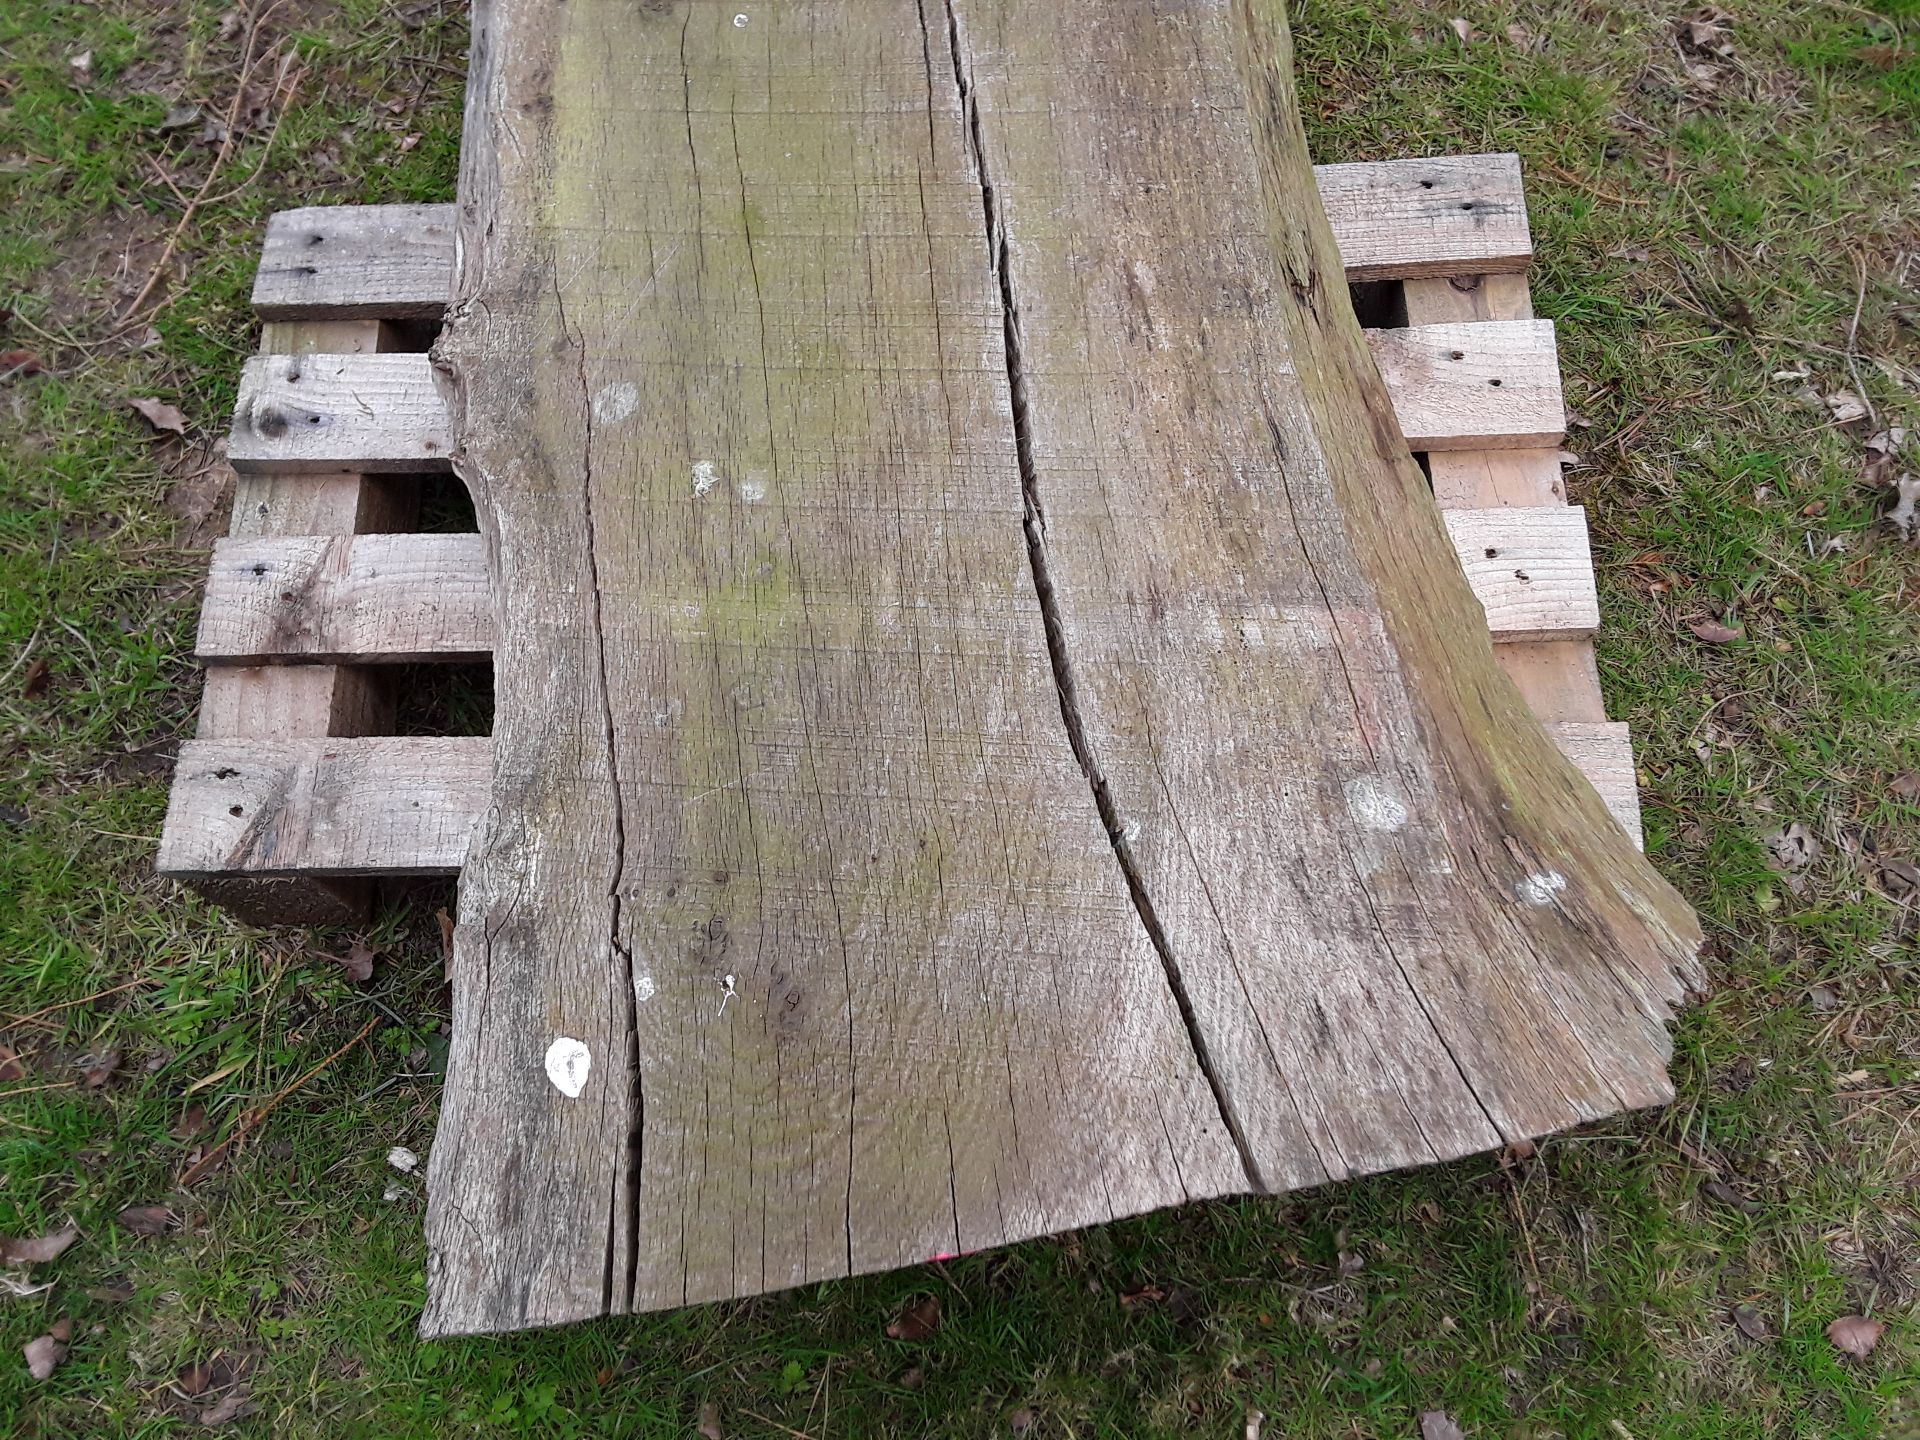 1 x Hardwood Rustic Air Dried Waney Edge / Live Edge English Oak Slab / Table Top - Image 6 of 6